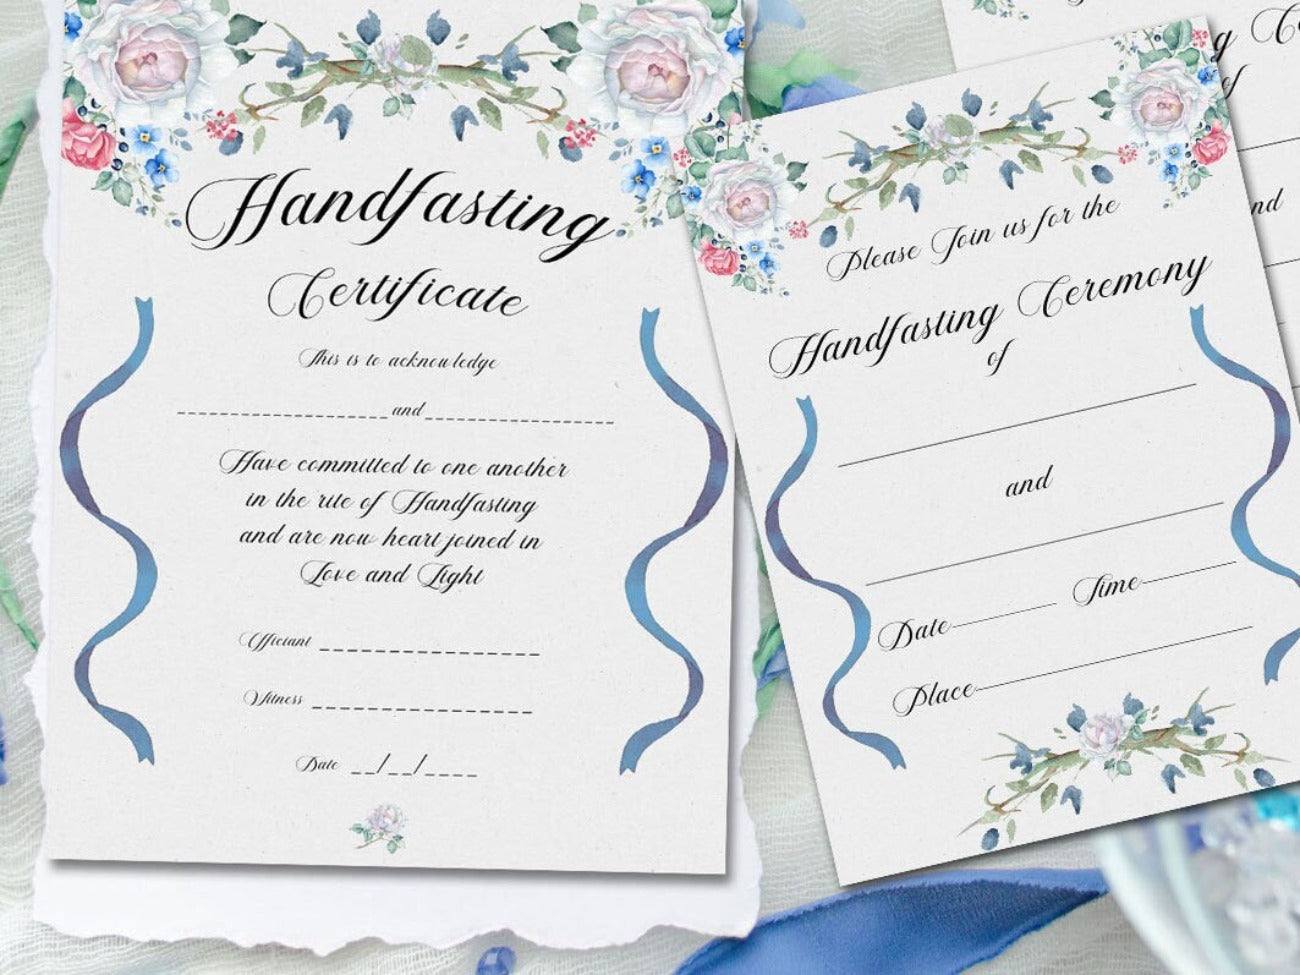 ELEGANT HANDFASTING Certificate and Invitation, Printable Instant Download- Morgana Magick Spell